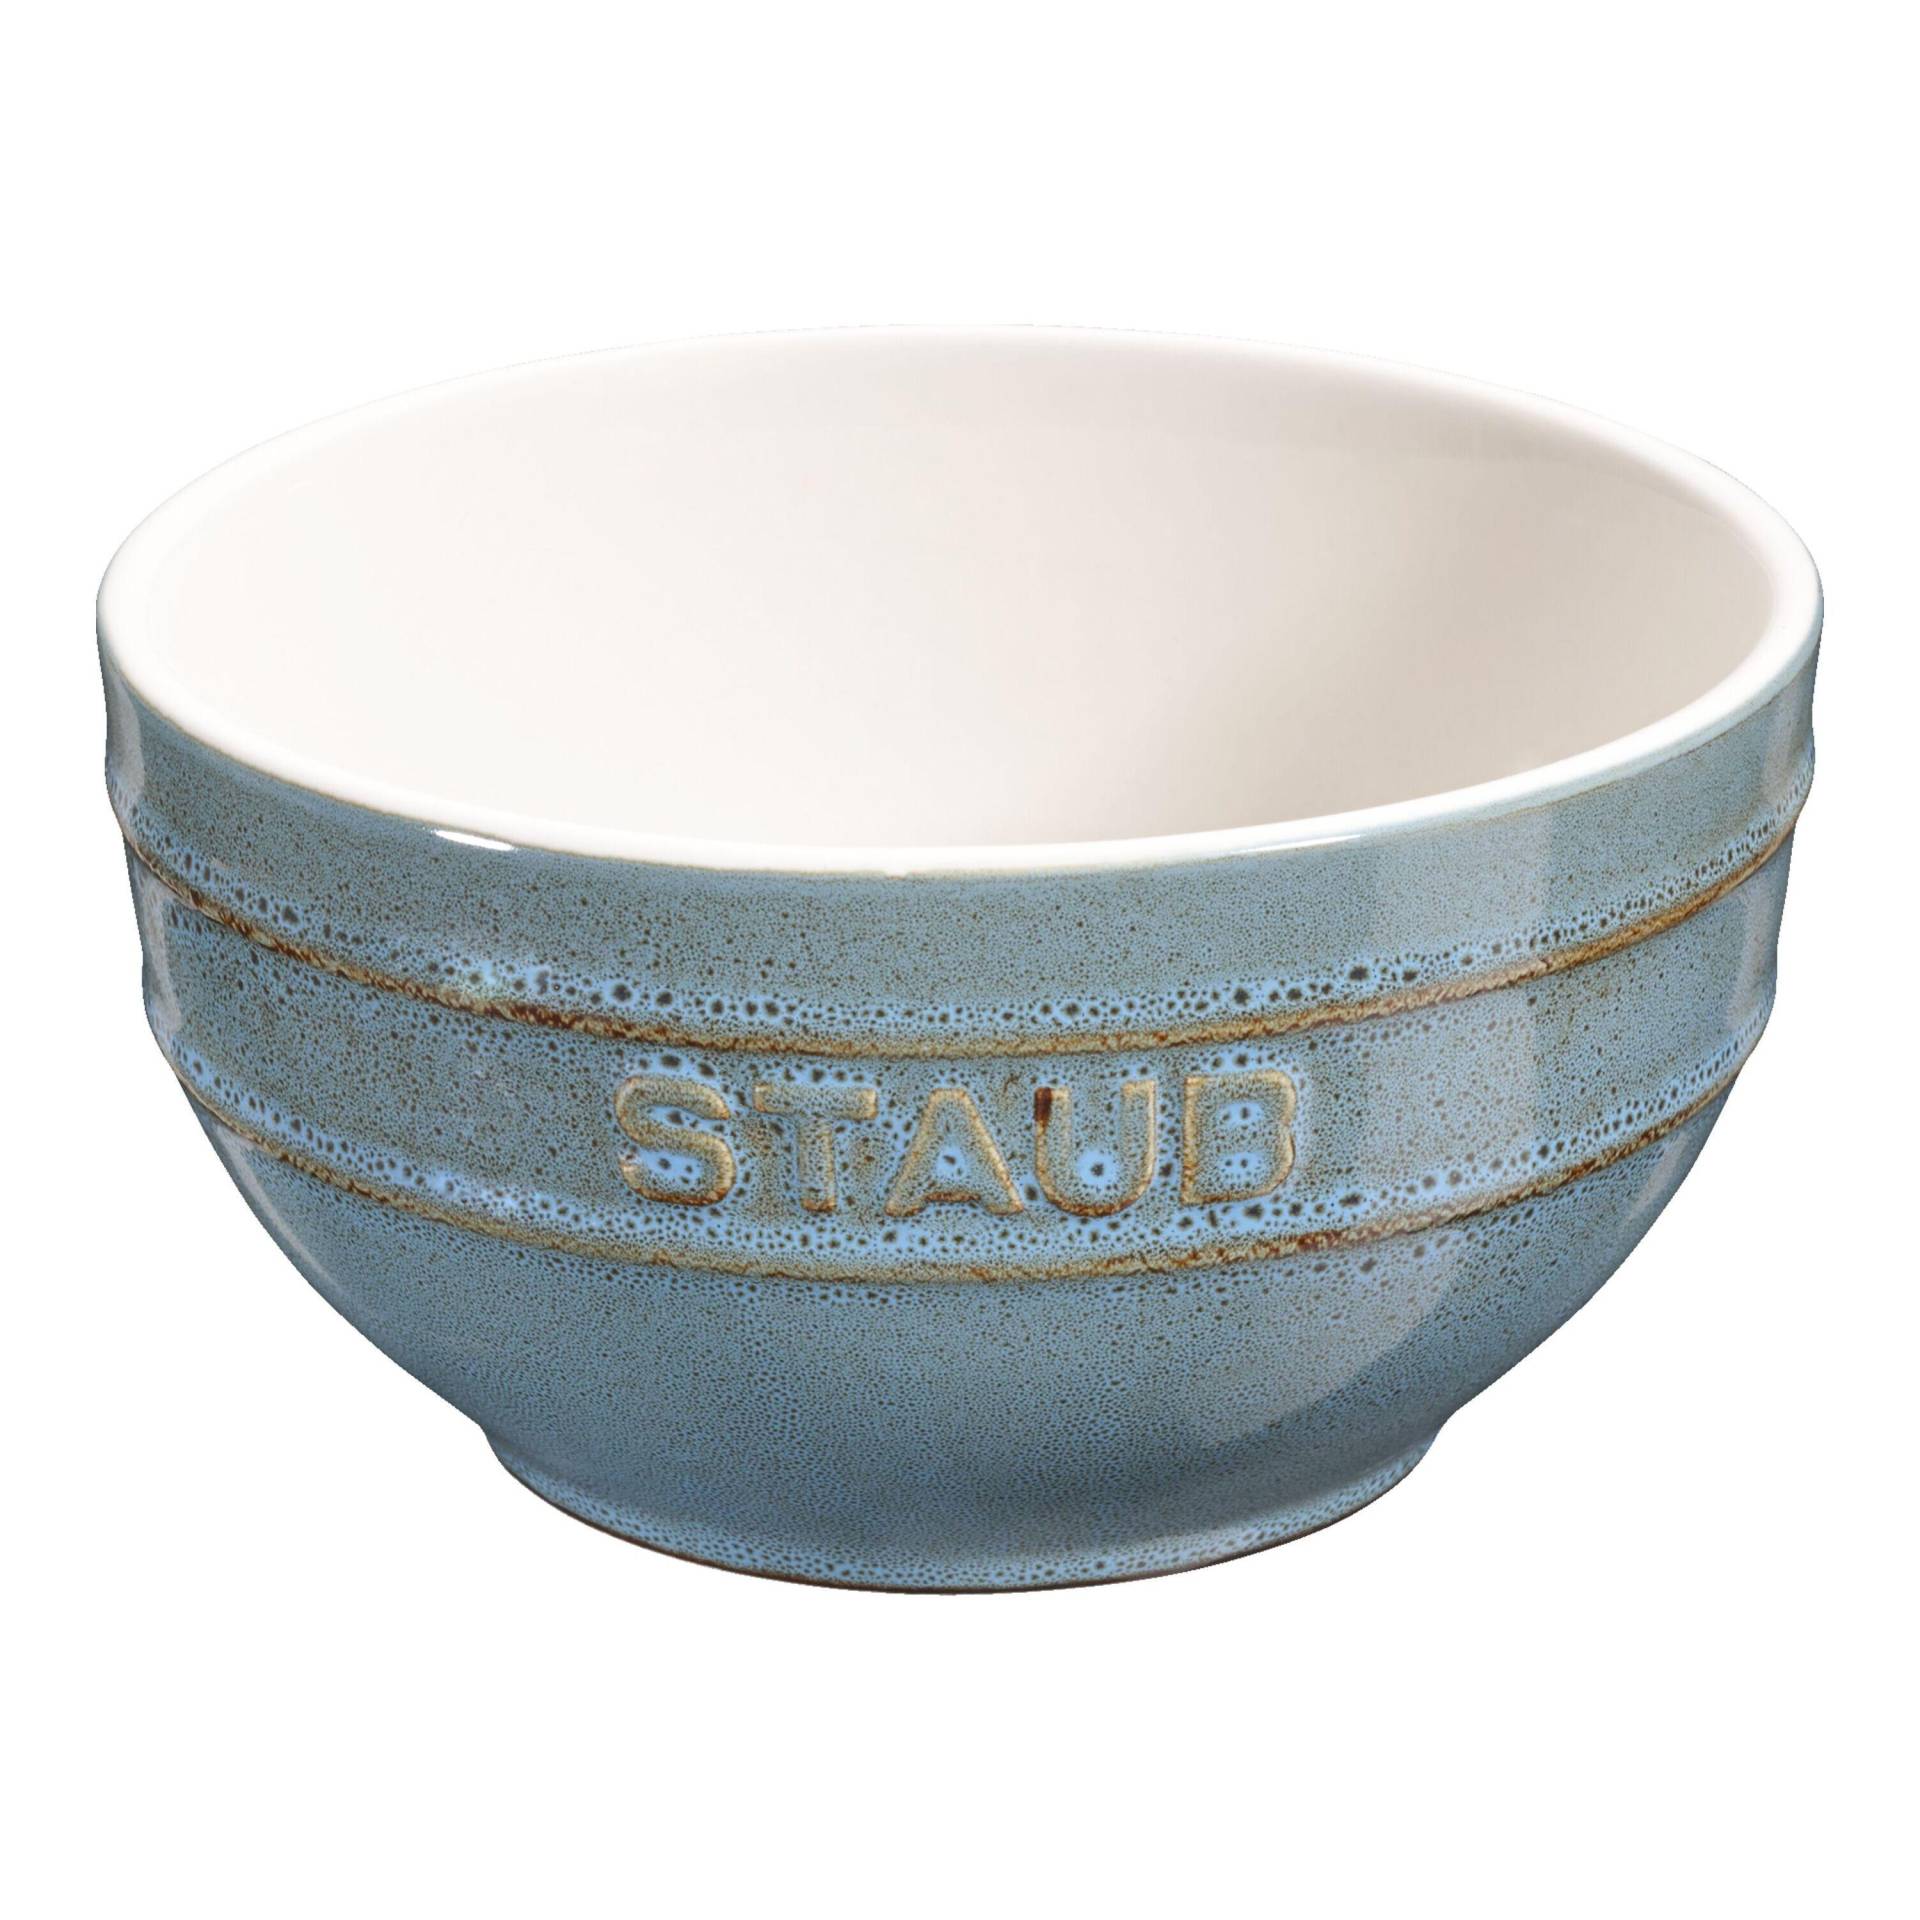 Staub Ceramique Schüssel 14 cm, Keramik, Antik-Türkis von Staub